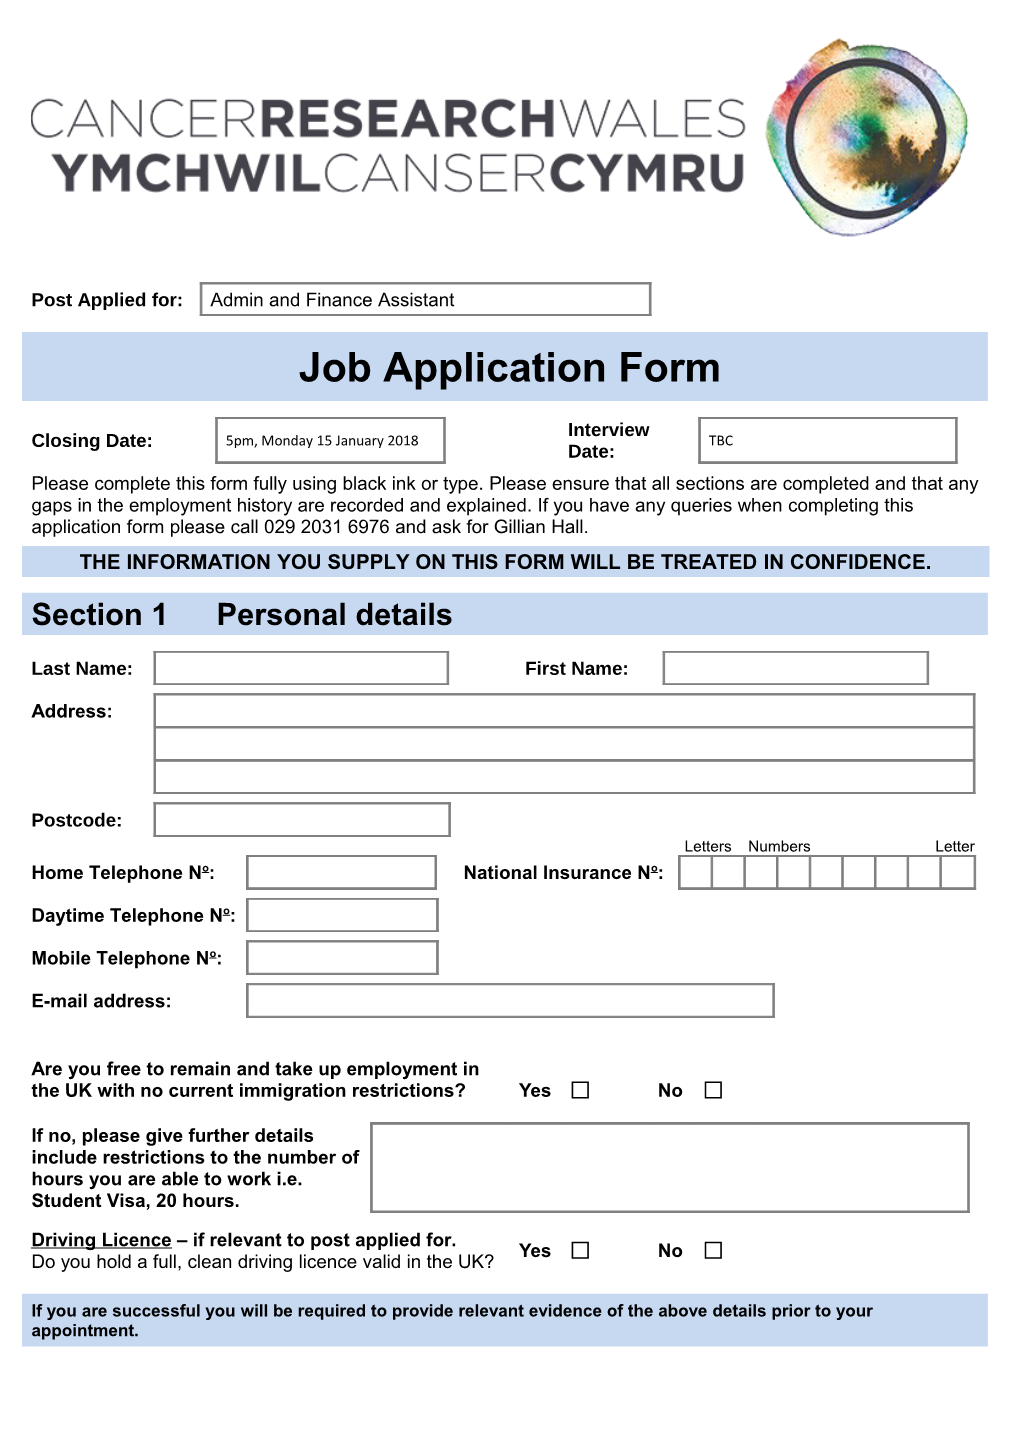 Job Application Form Template s13